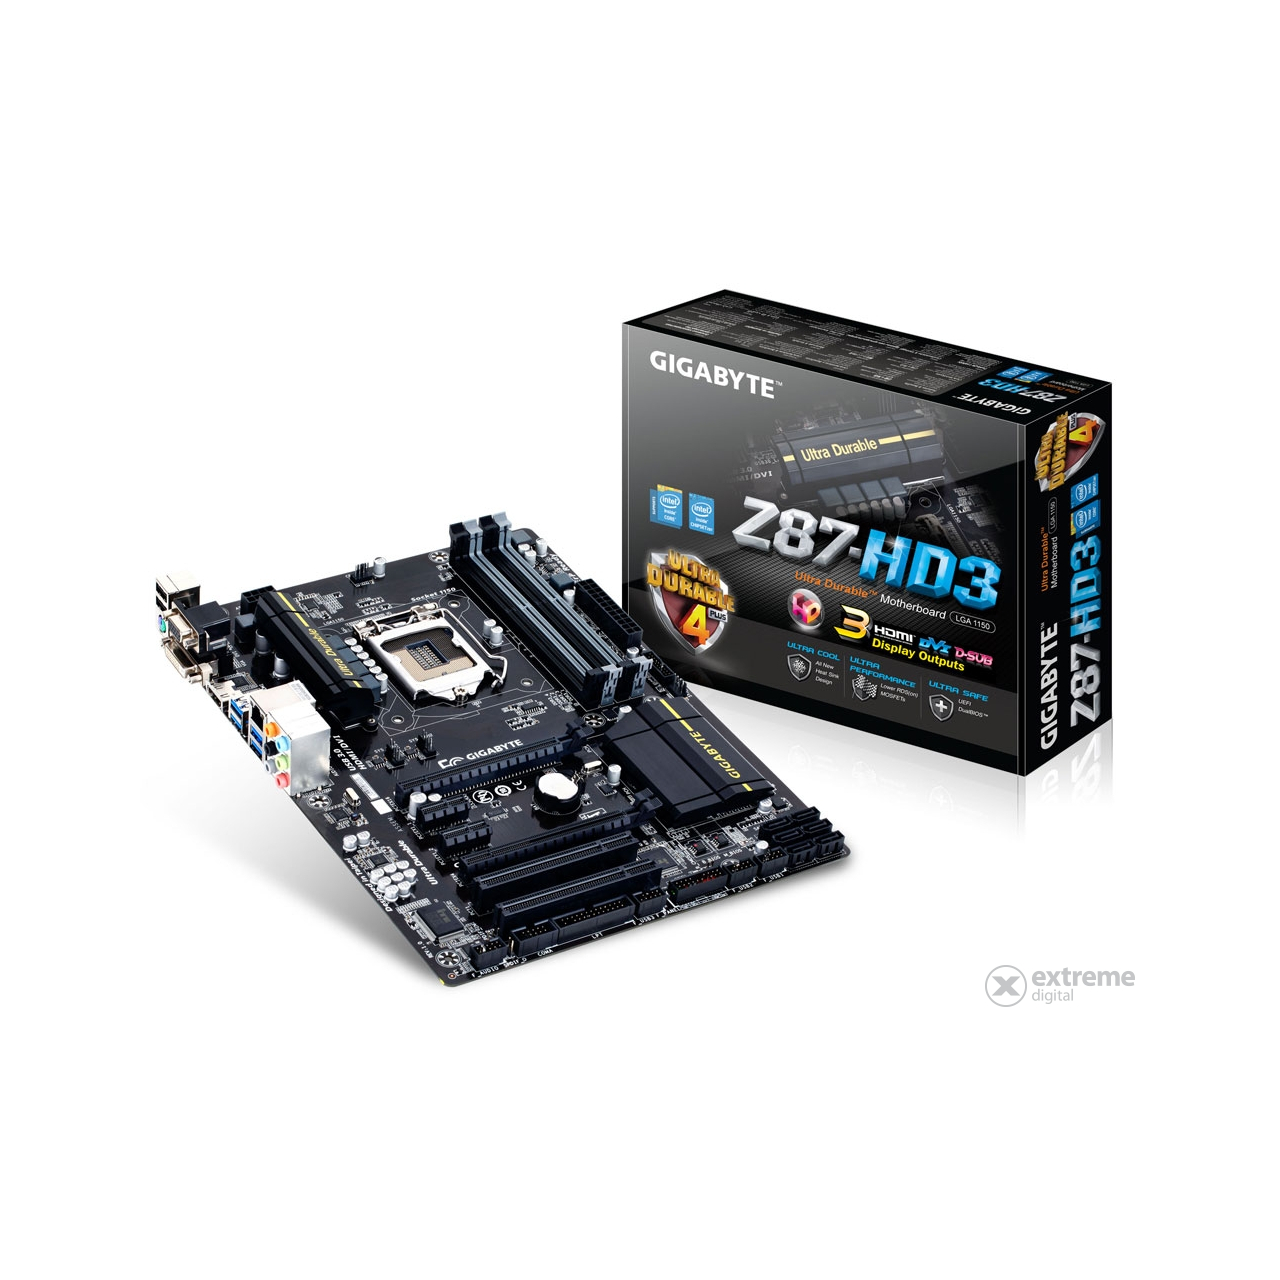 Gigabyte Z87-HD3 Intel Z87